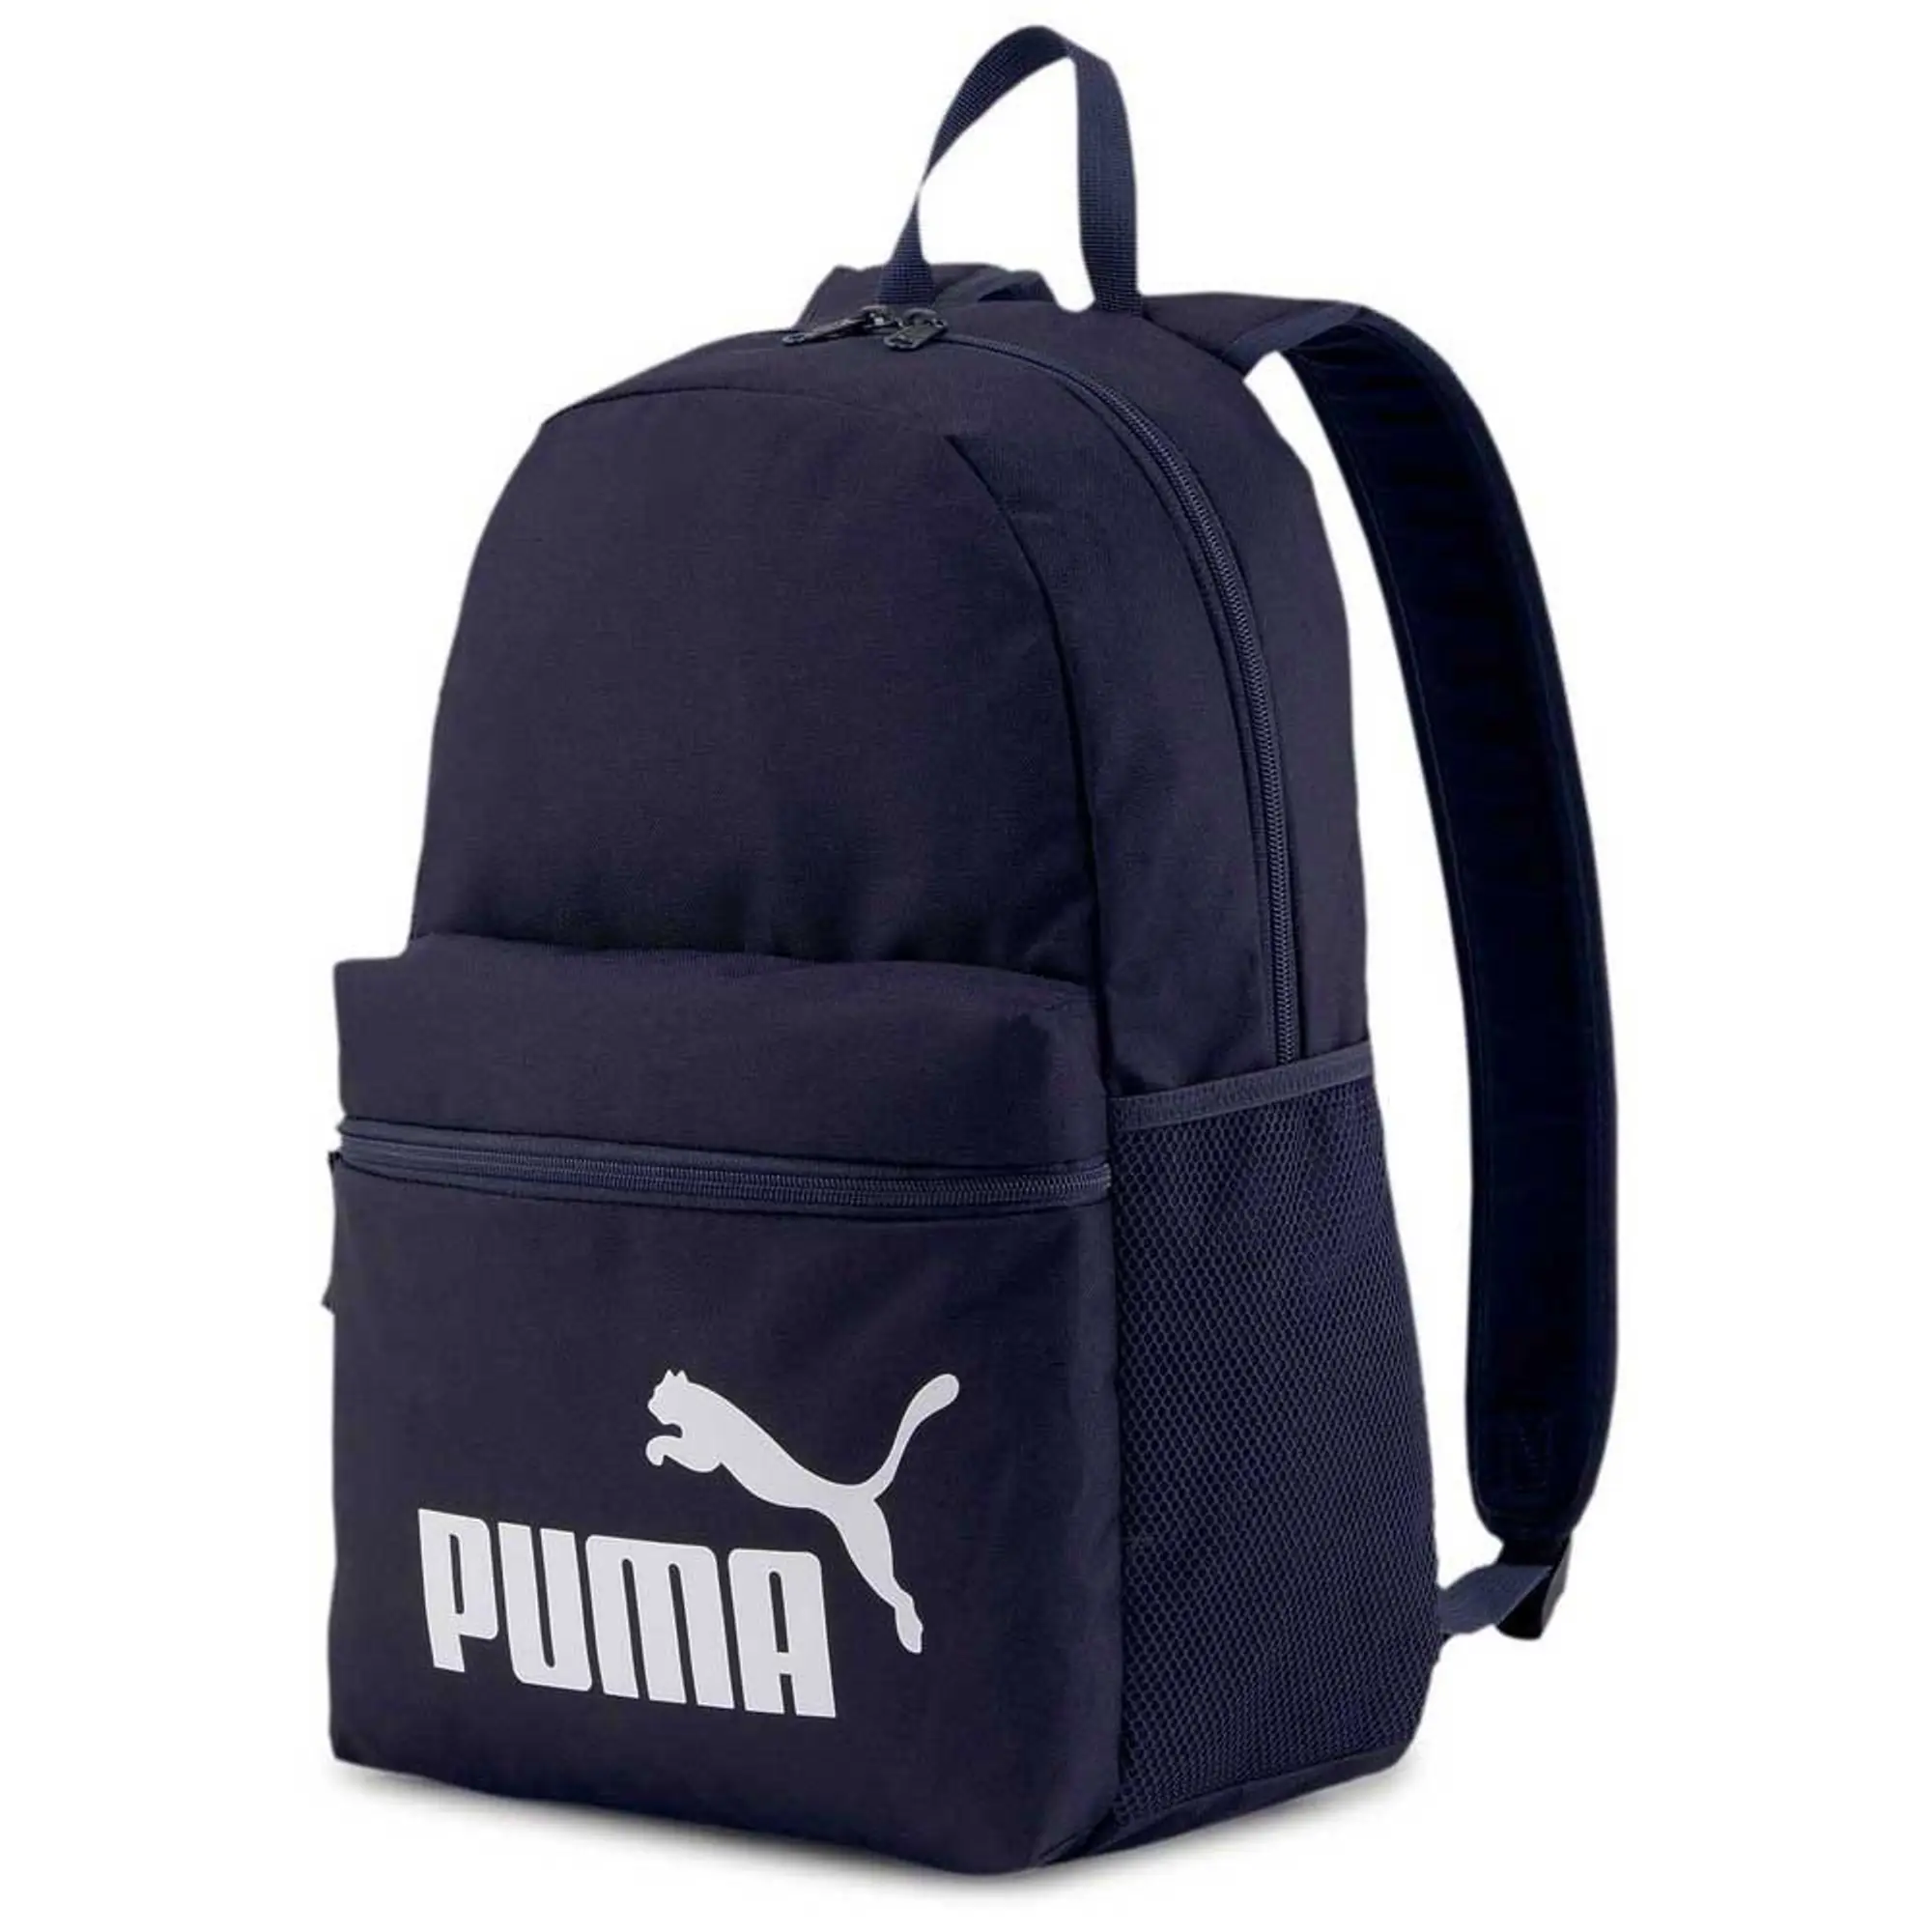 Puma Phase Backpack Sn99 - Blue